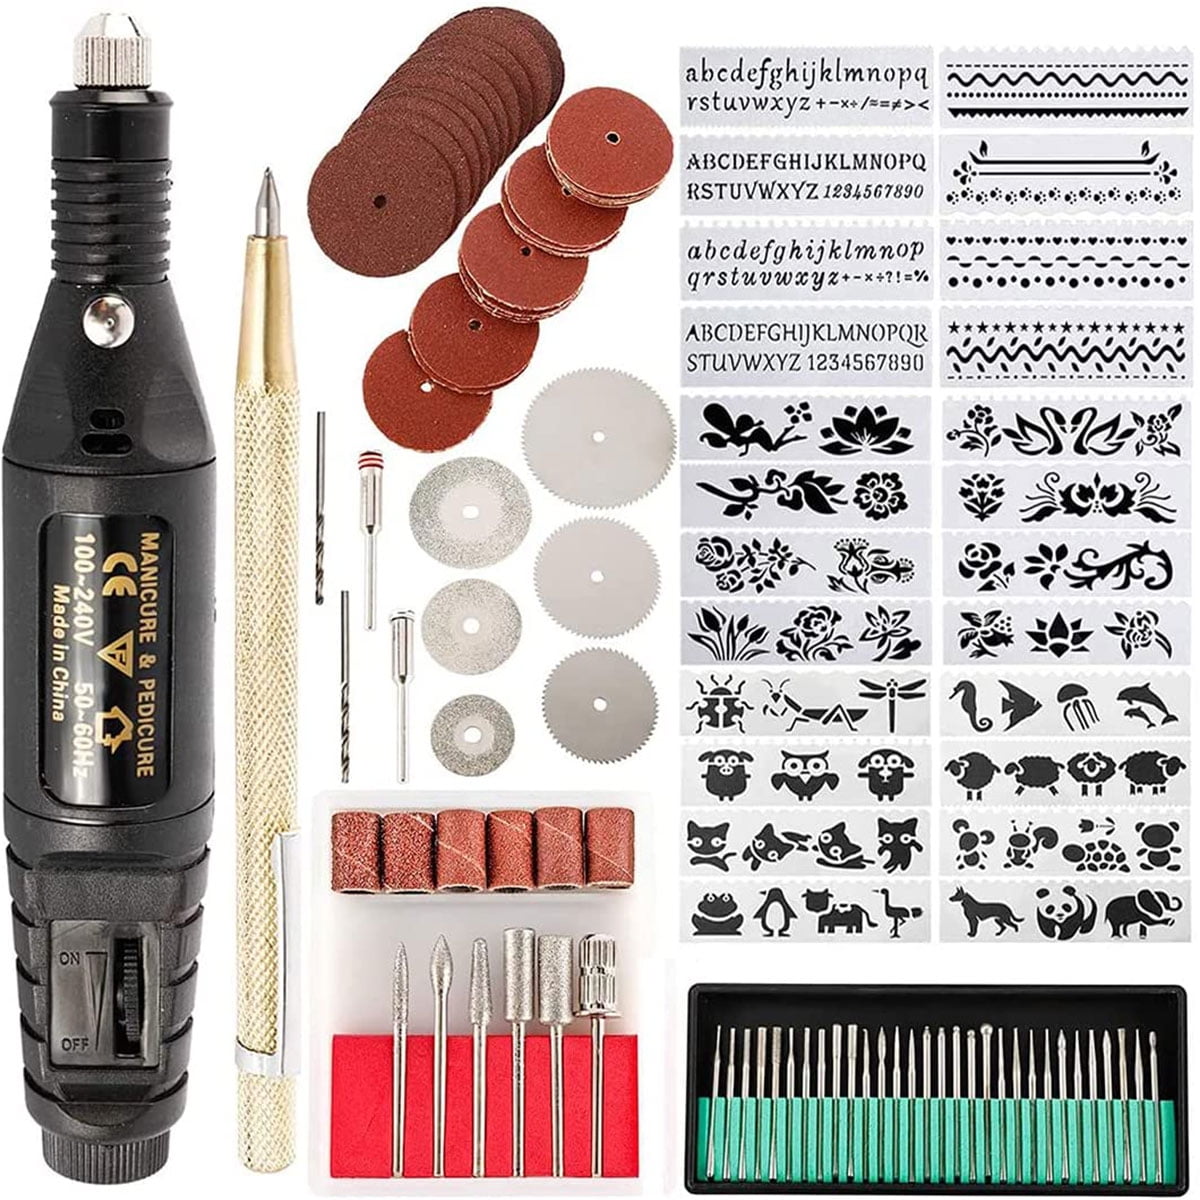 Fyrome 108 Piece Engraving Tool Kit with Scriber, Multi-Functional